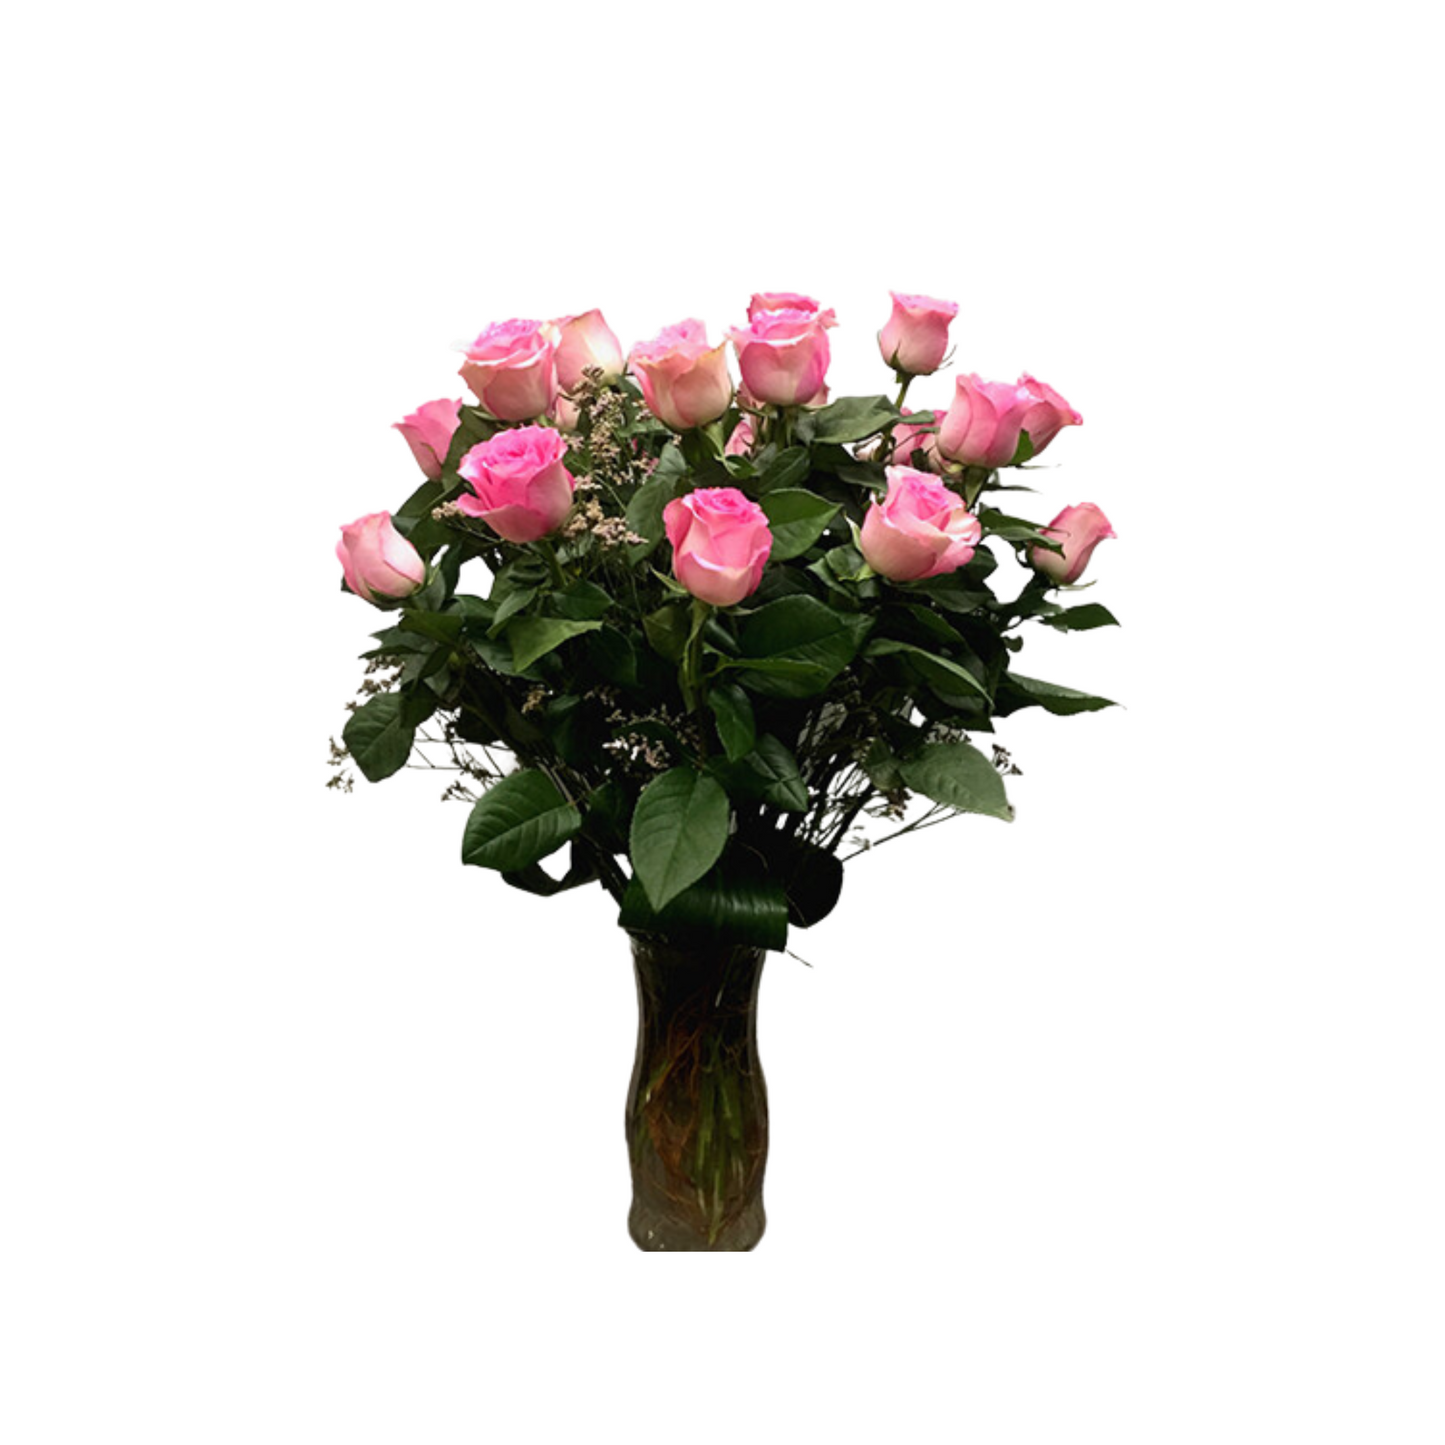 Roses - In A Vase